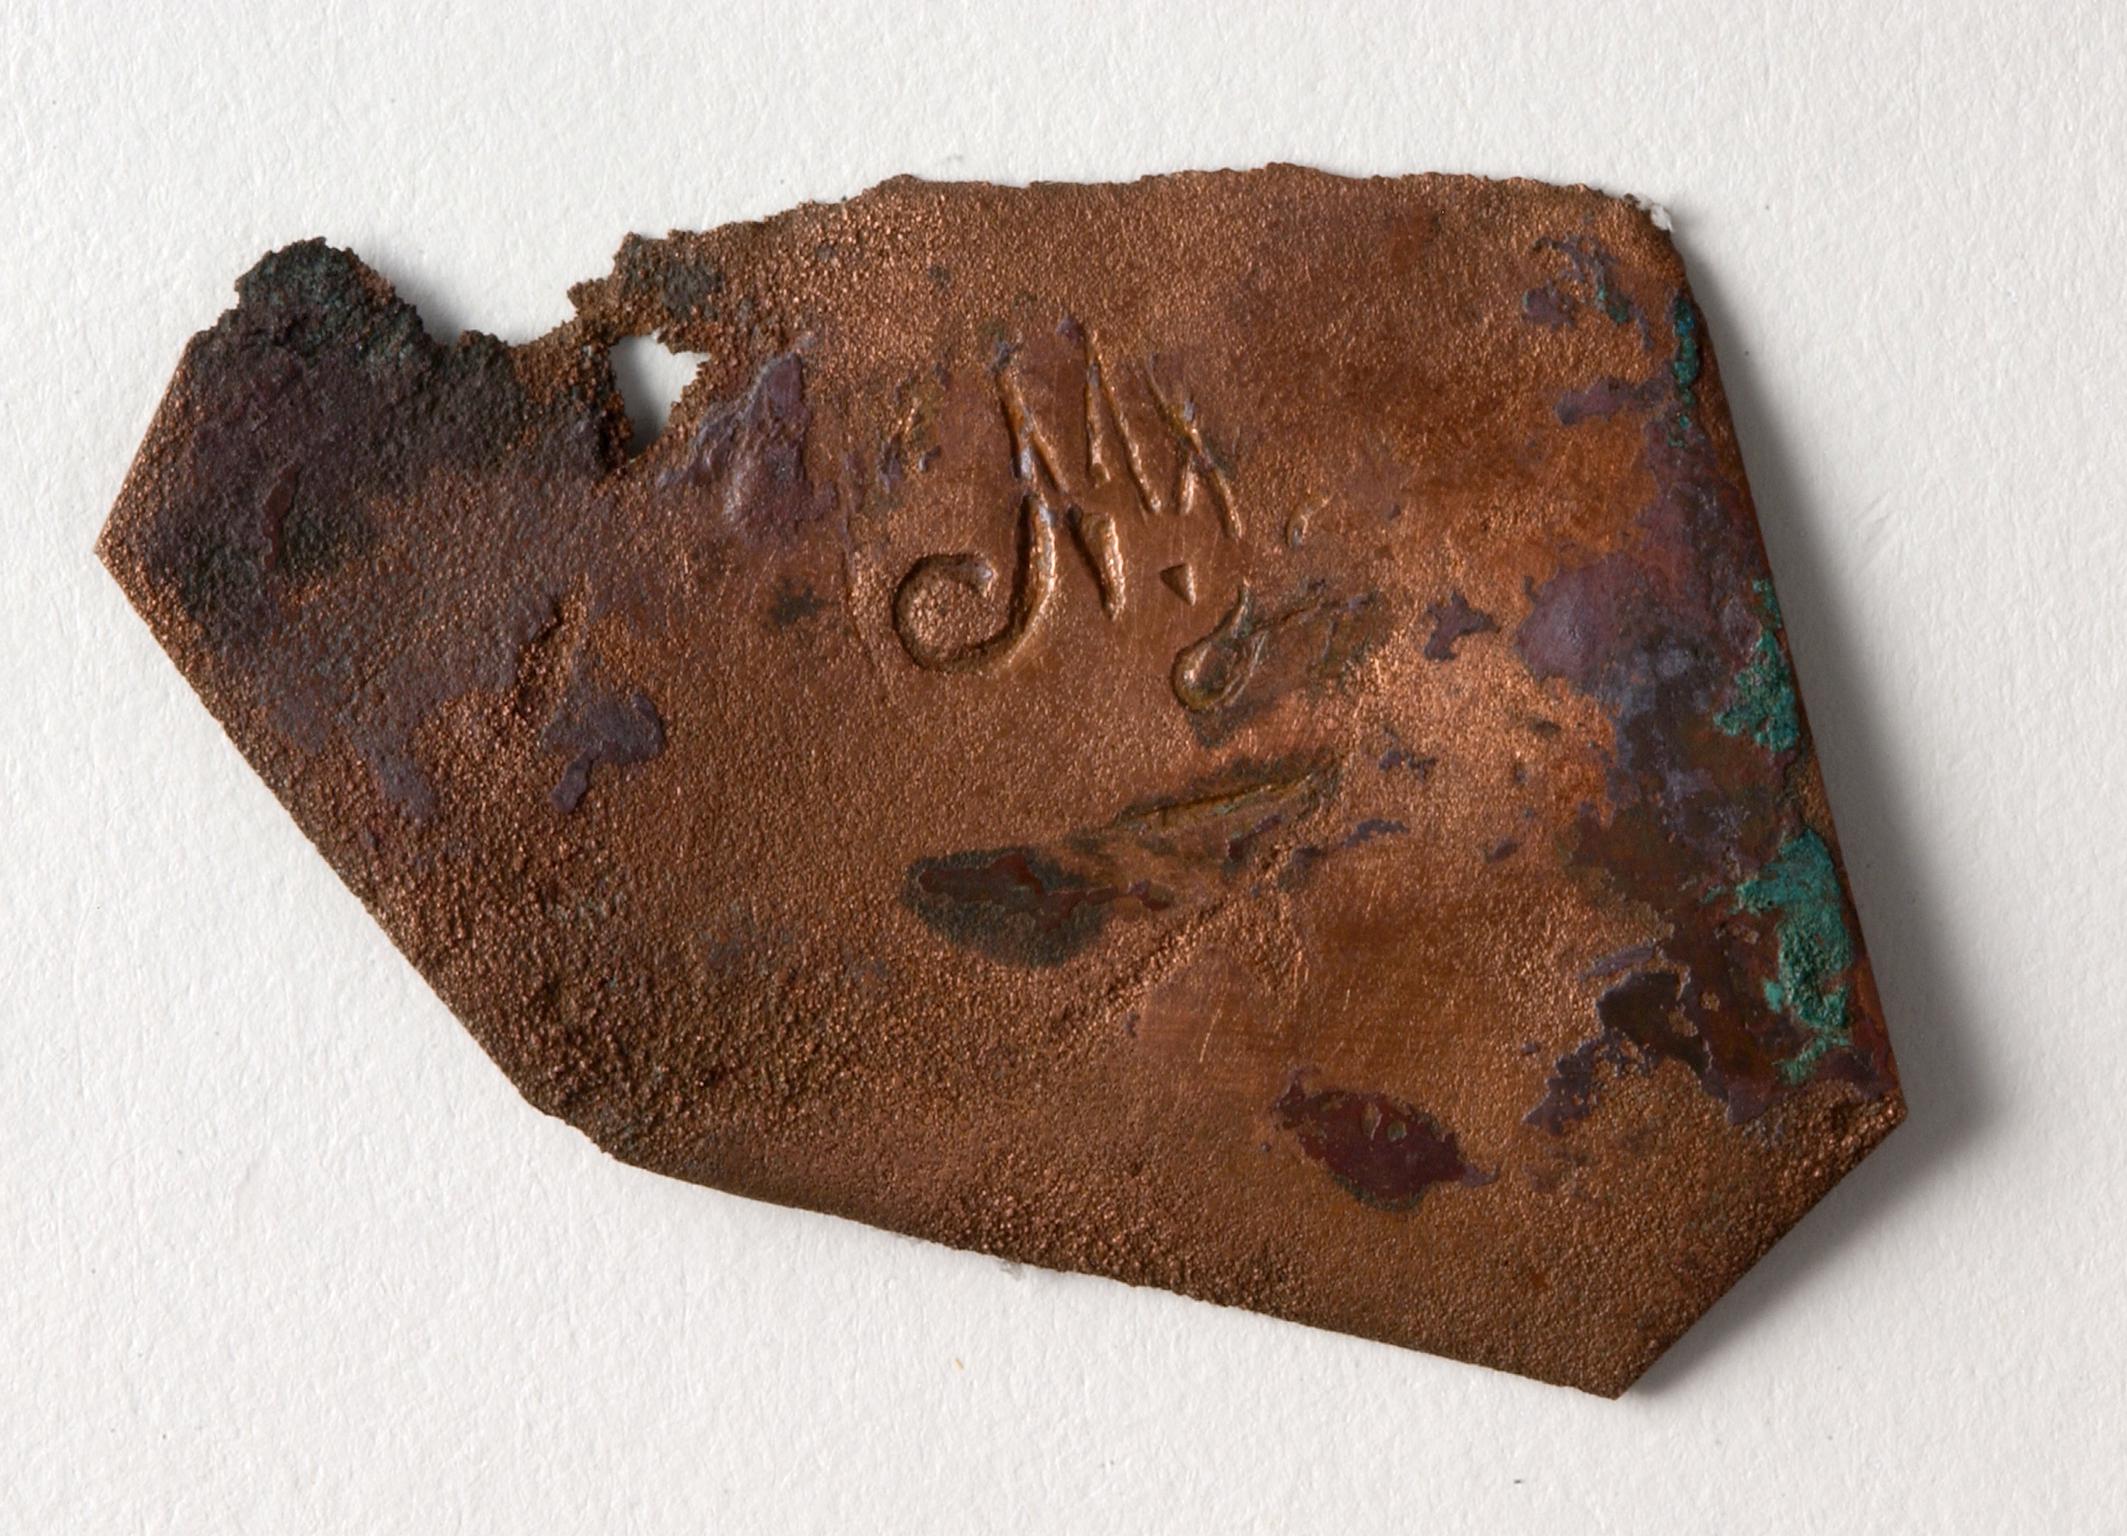 Copper sheathing fragment